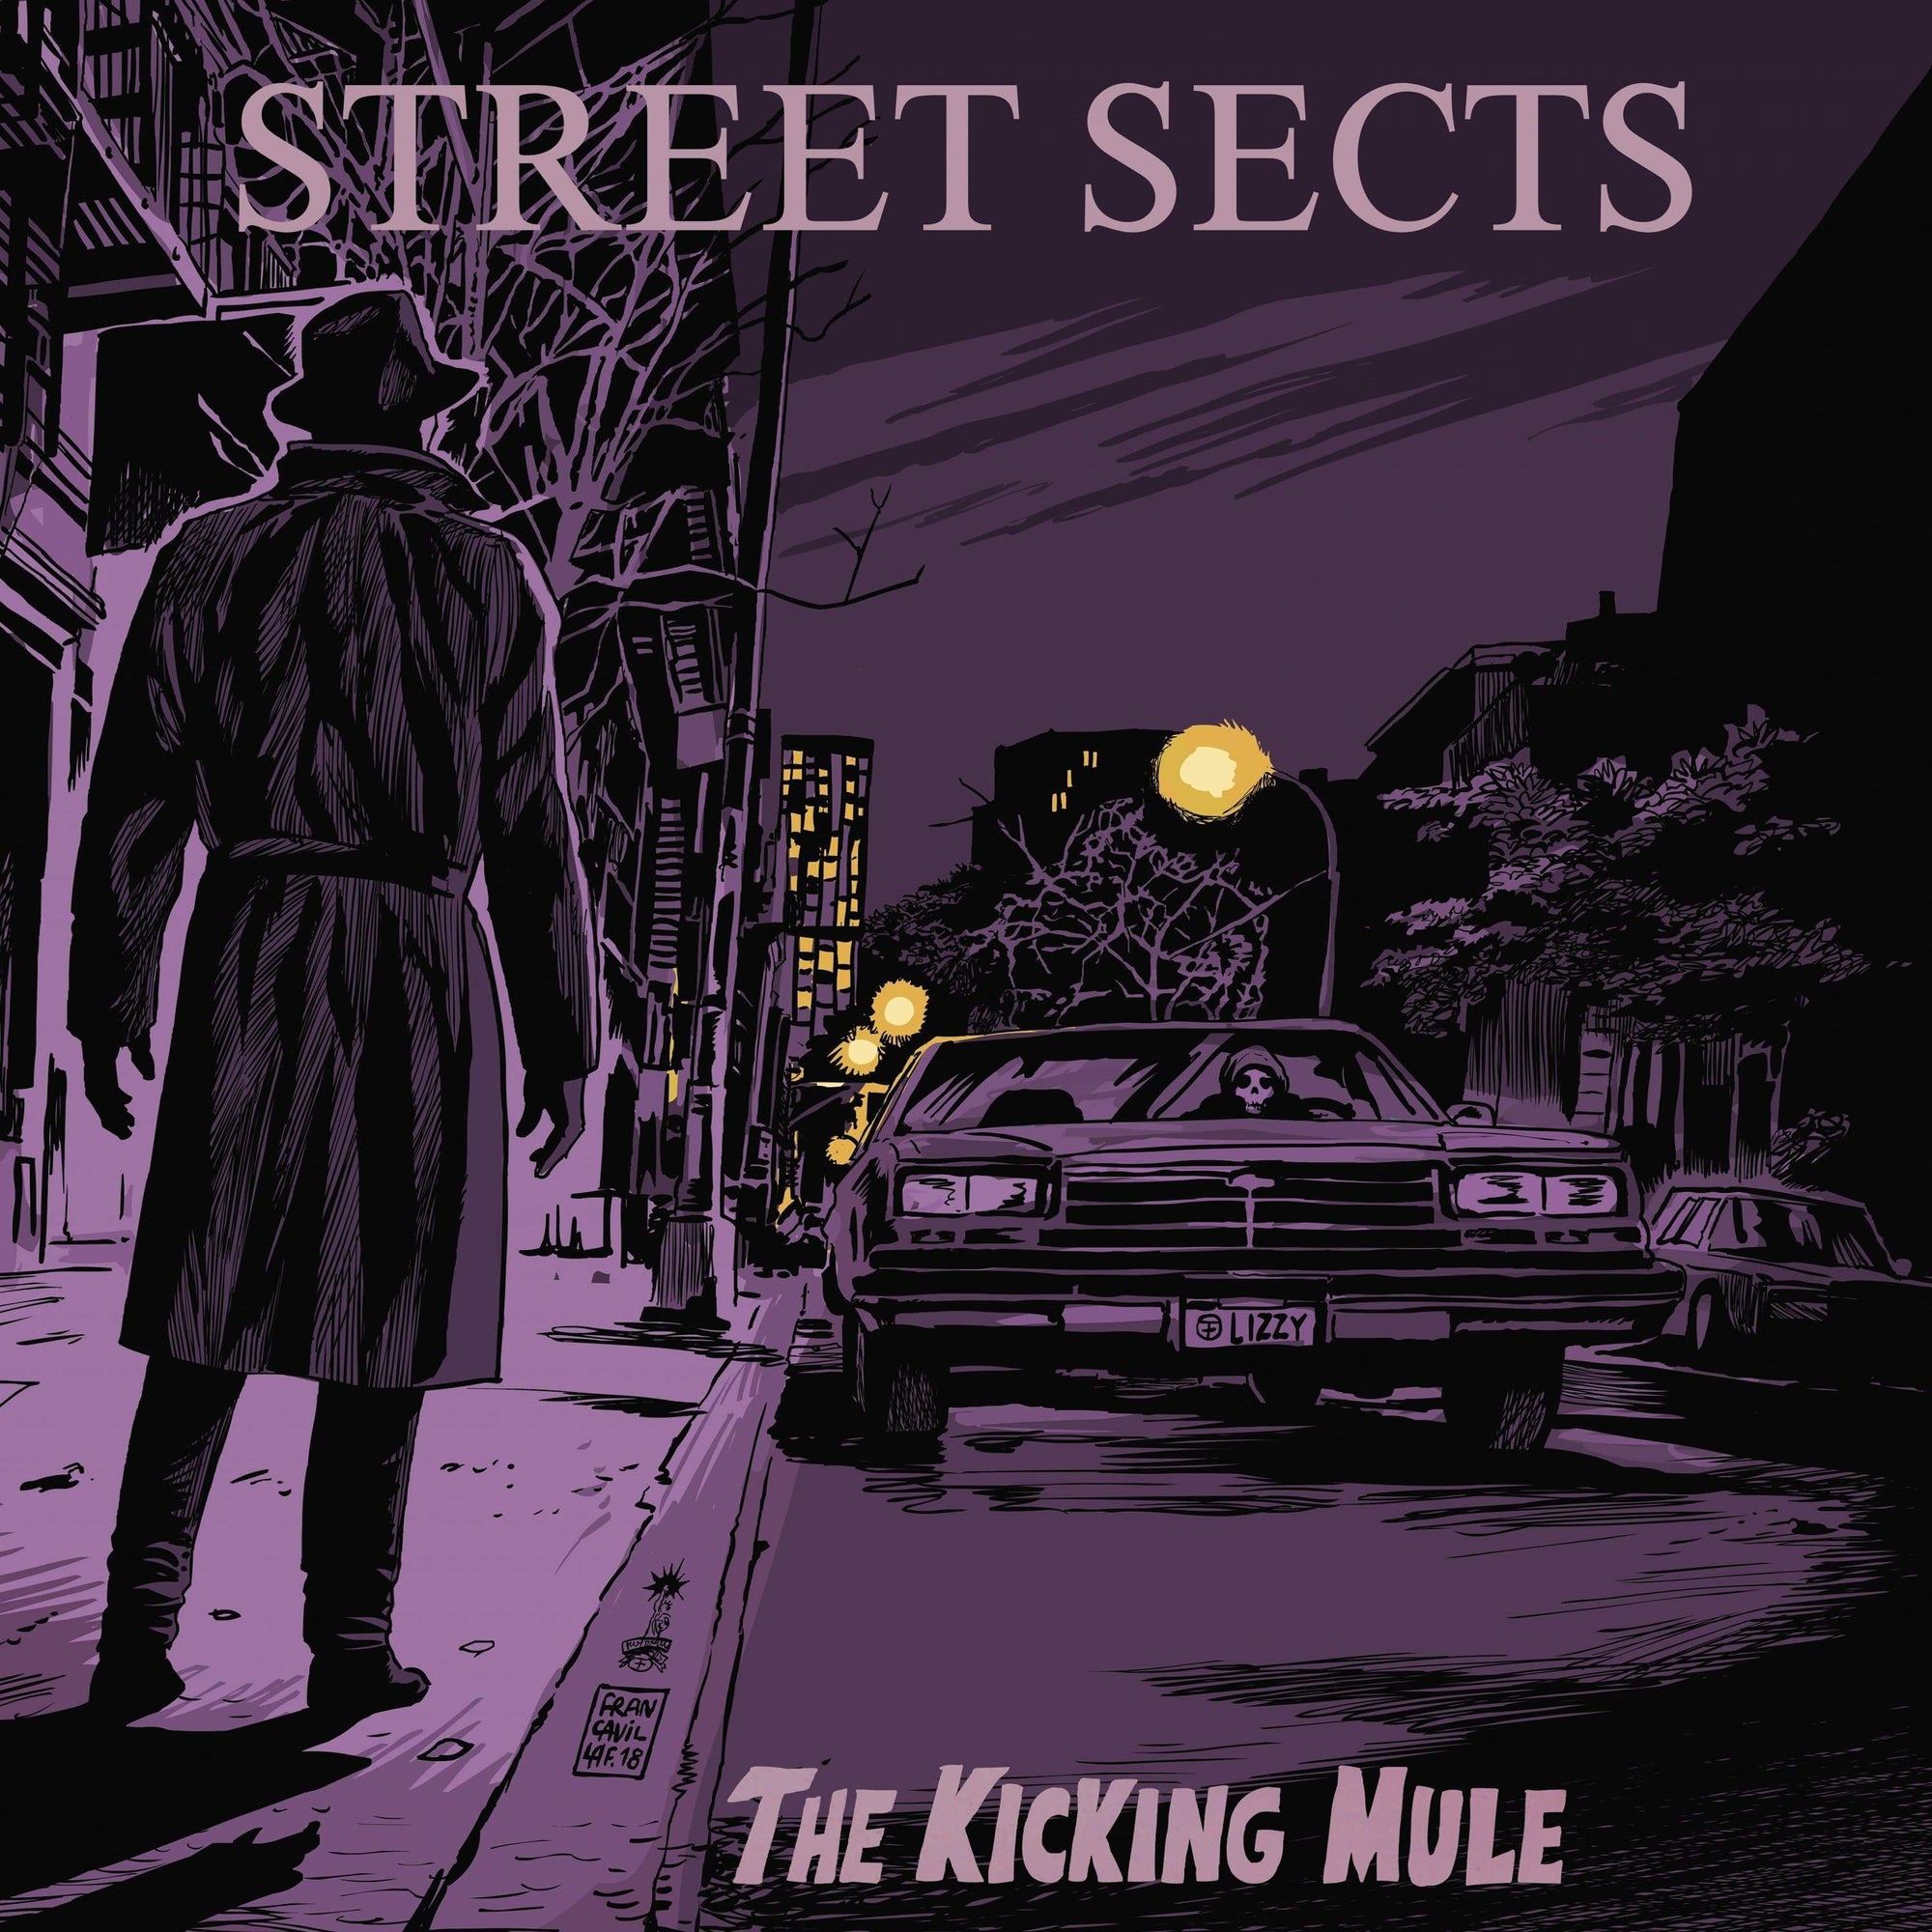 The Flenser Vinyl Street Sects "The Kicking Mule" LP